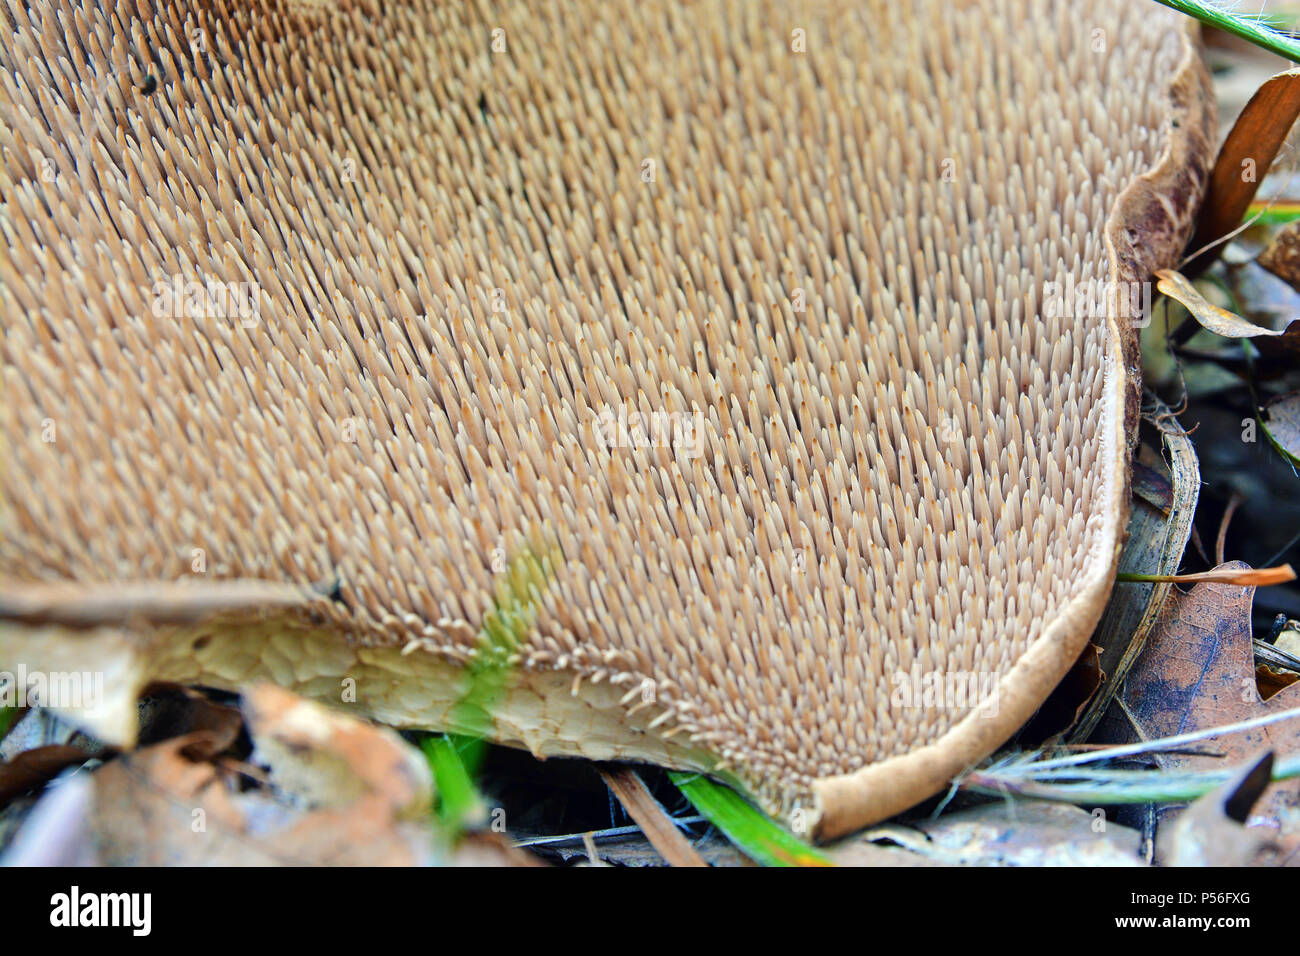 gills of a sarcodon imbricatus mushroom Stock Photo